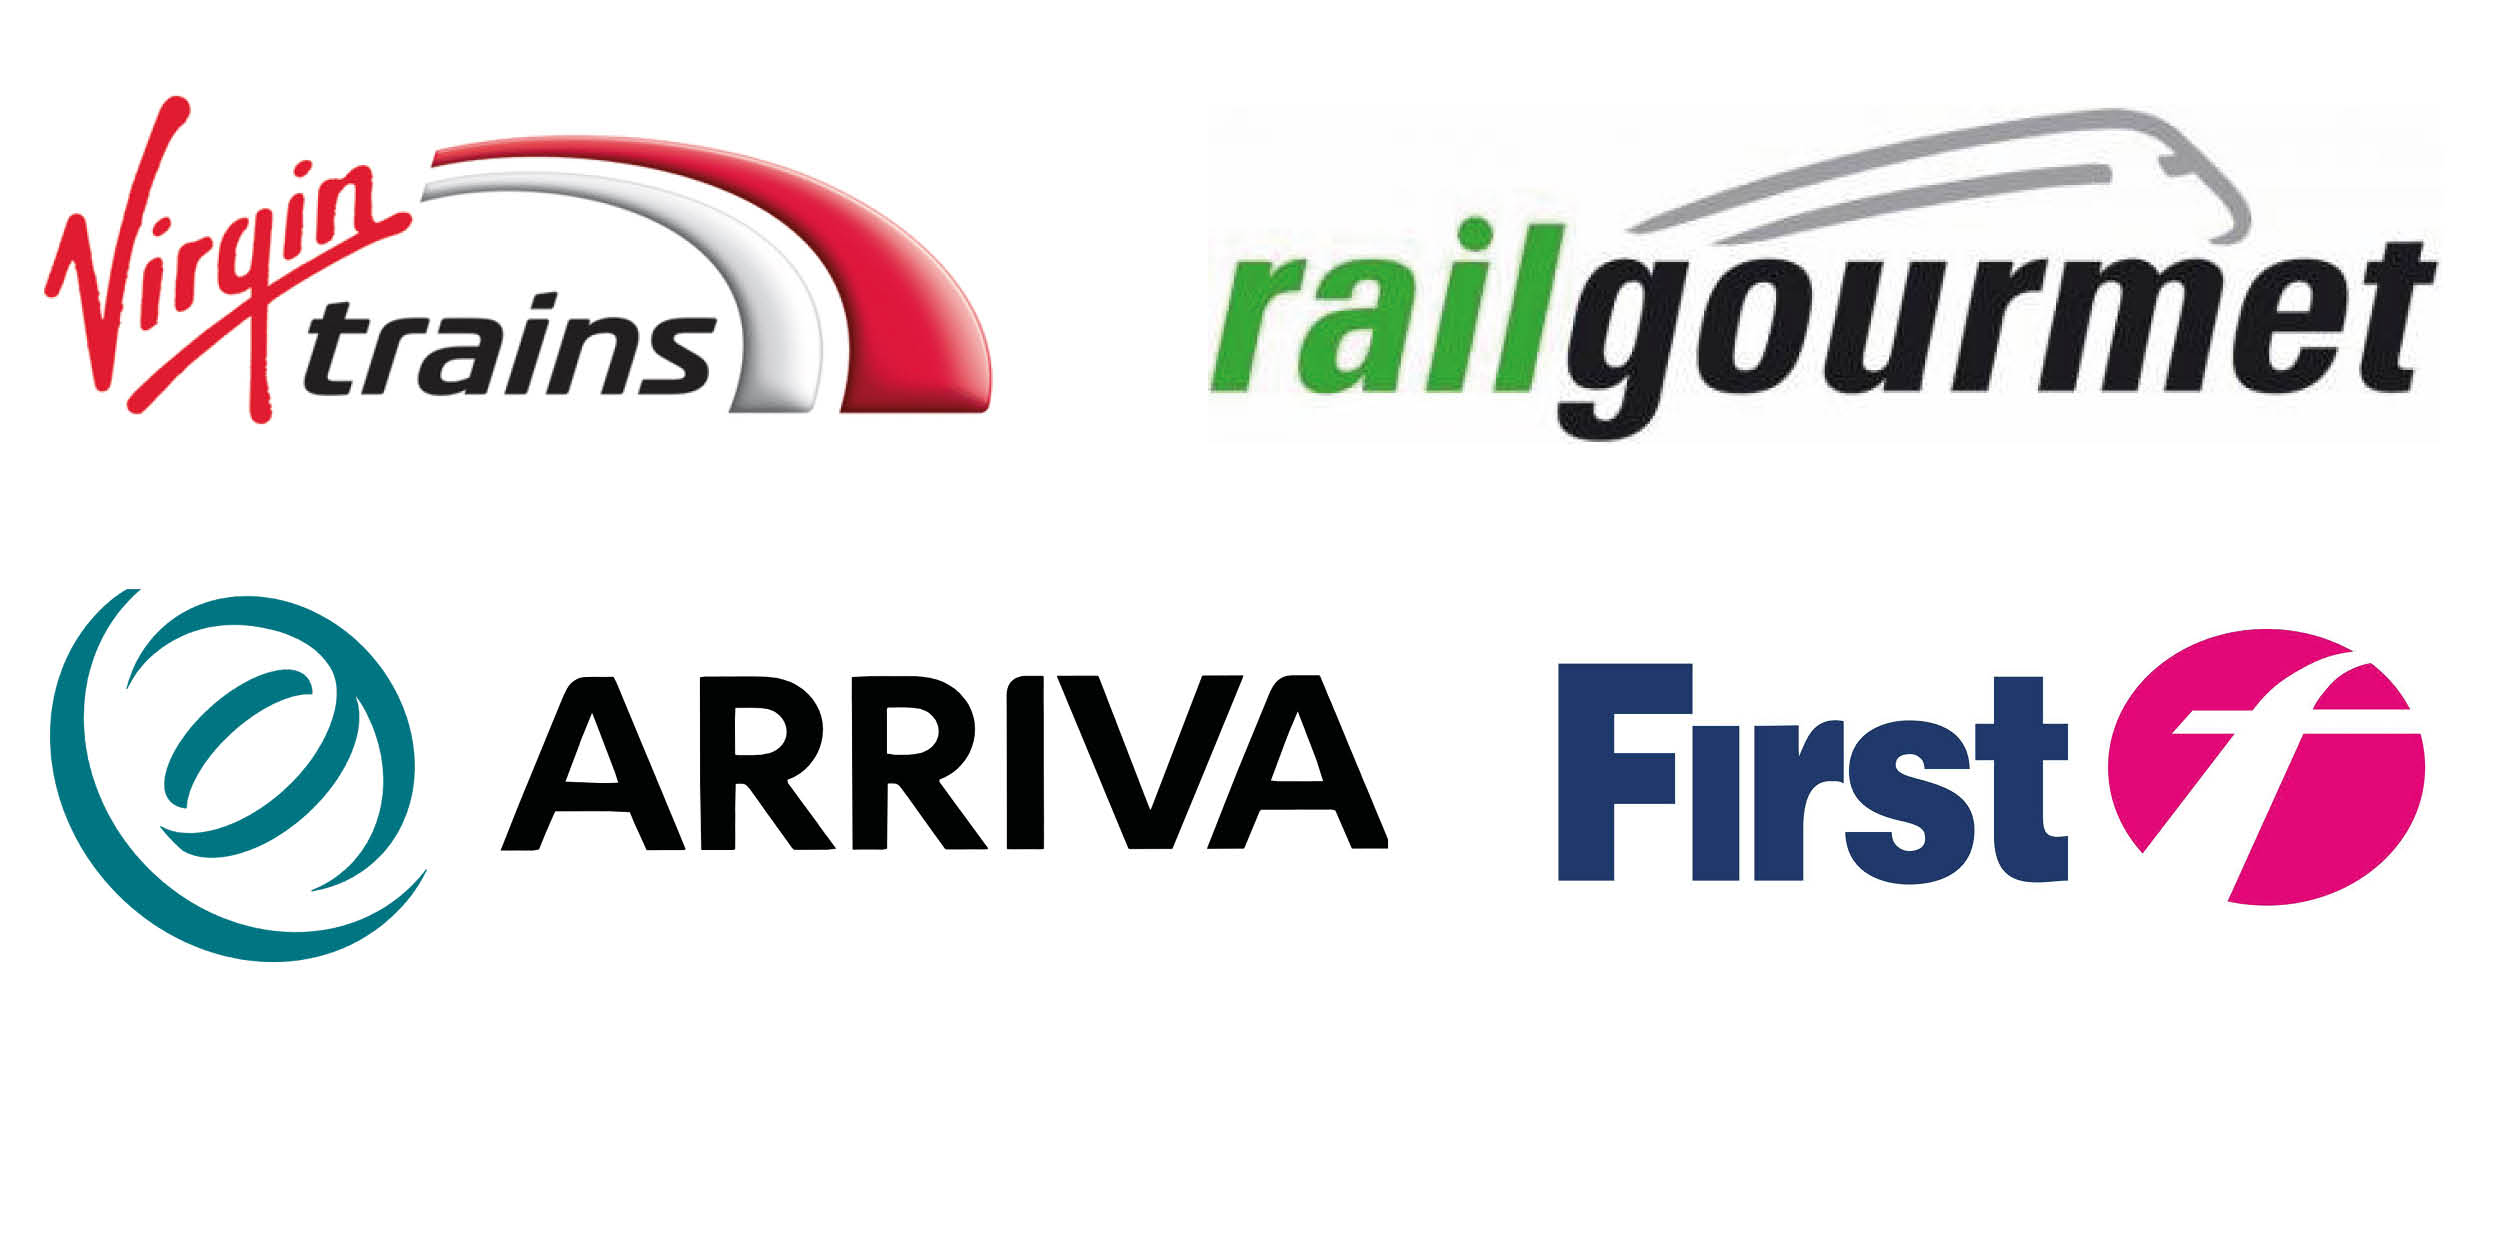 virgin trains, rail gourmet, arriva and first trains logos